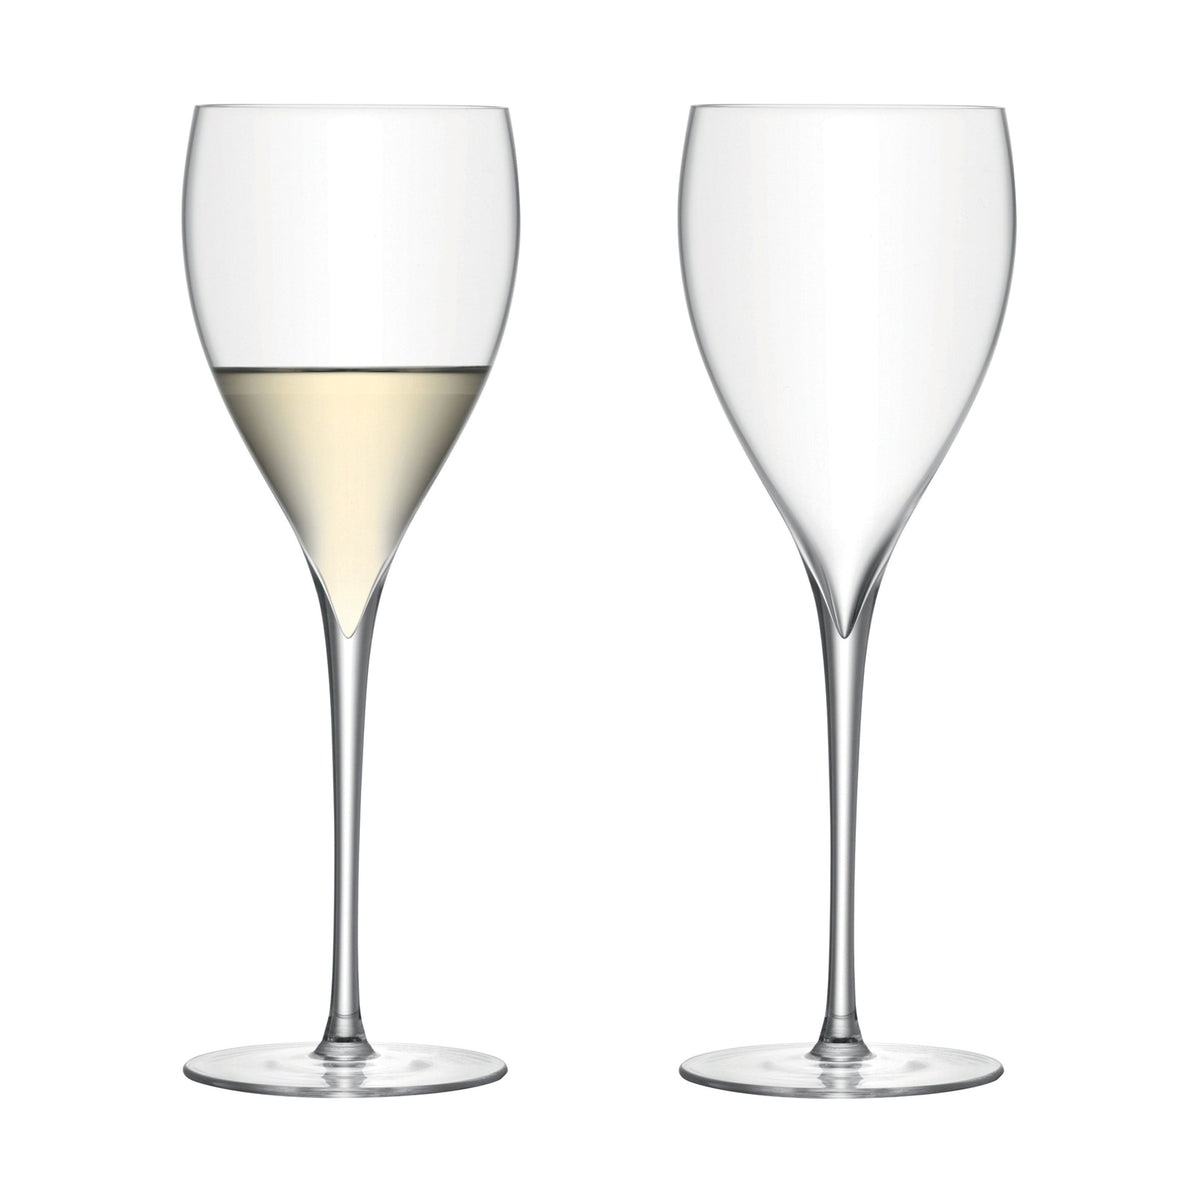 Savoy White Wine Glasses 12oz, Set of 2